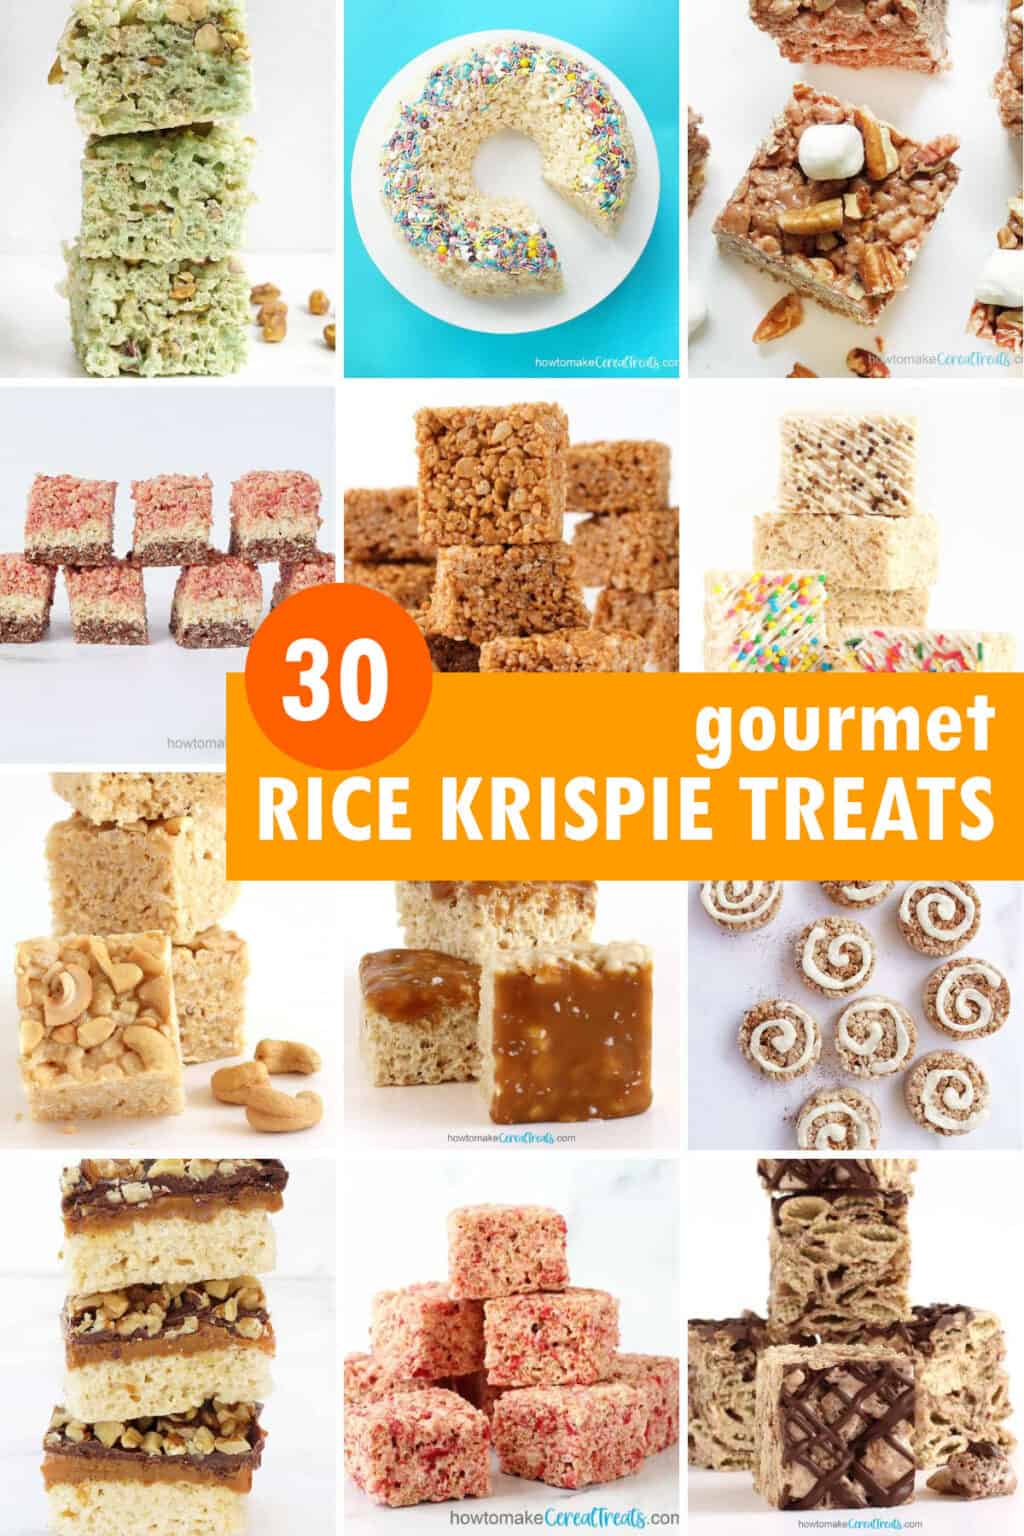 30 gourmet Rice Krispie Treats recipes